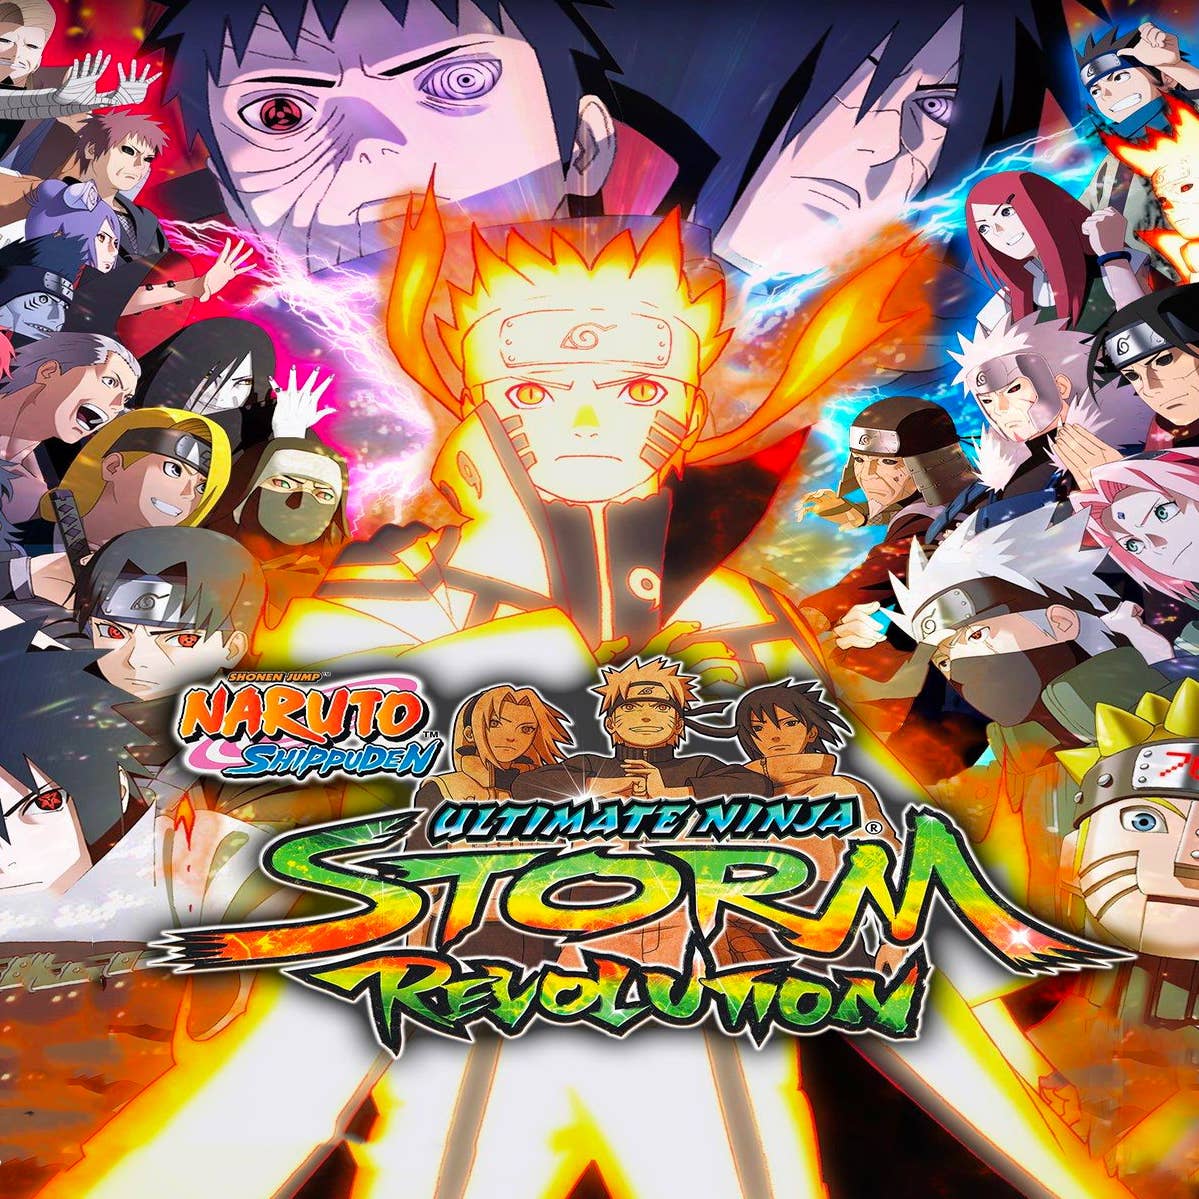 Naruto Online é anunciado já para 2013